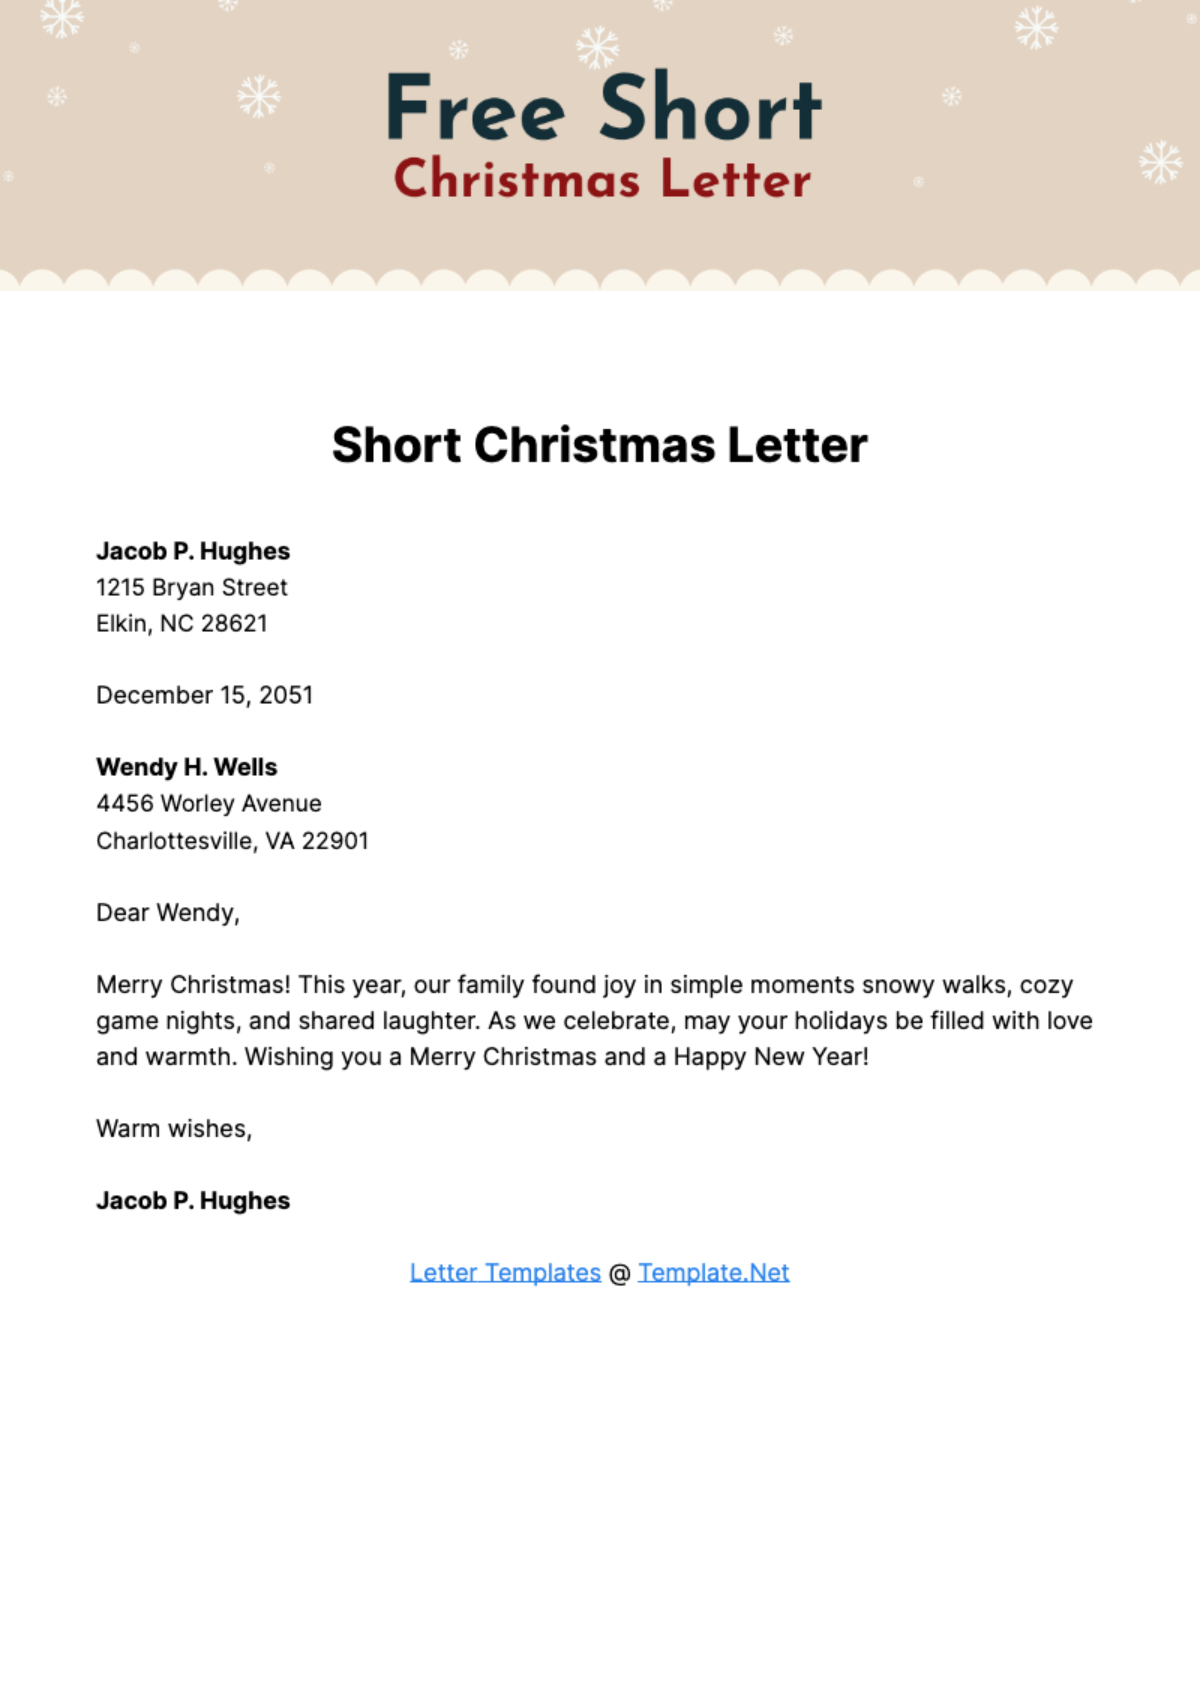 Free Short Christmas Letter Template